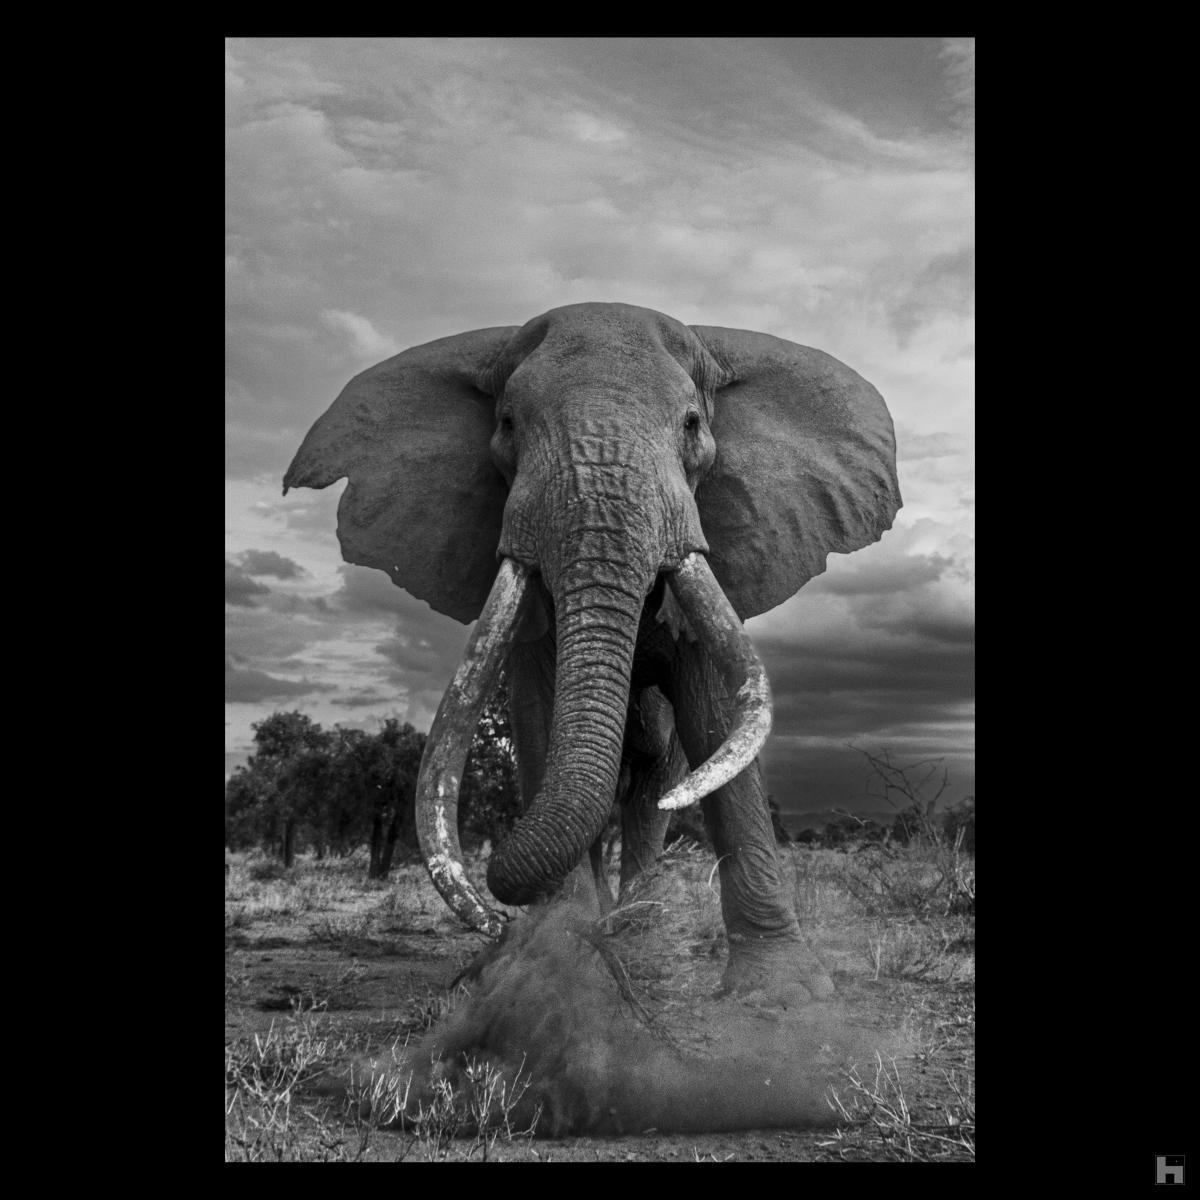 Black and white wildlife photo of Craig, one of Kenya's oldest elephants eating branches.